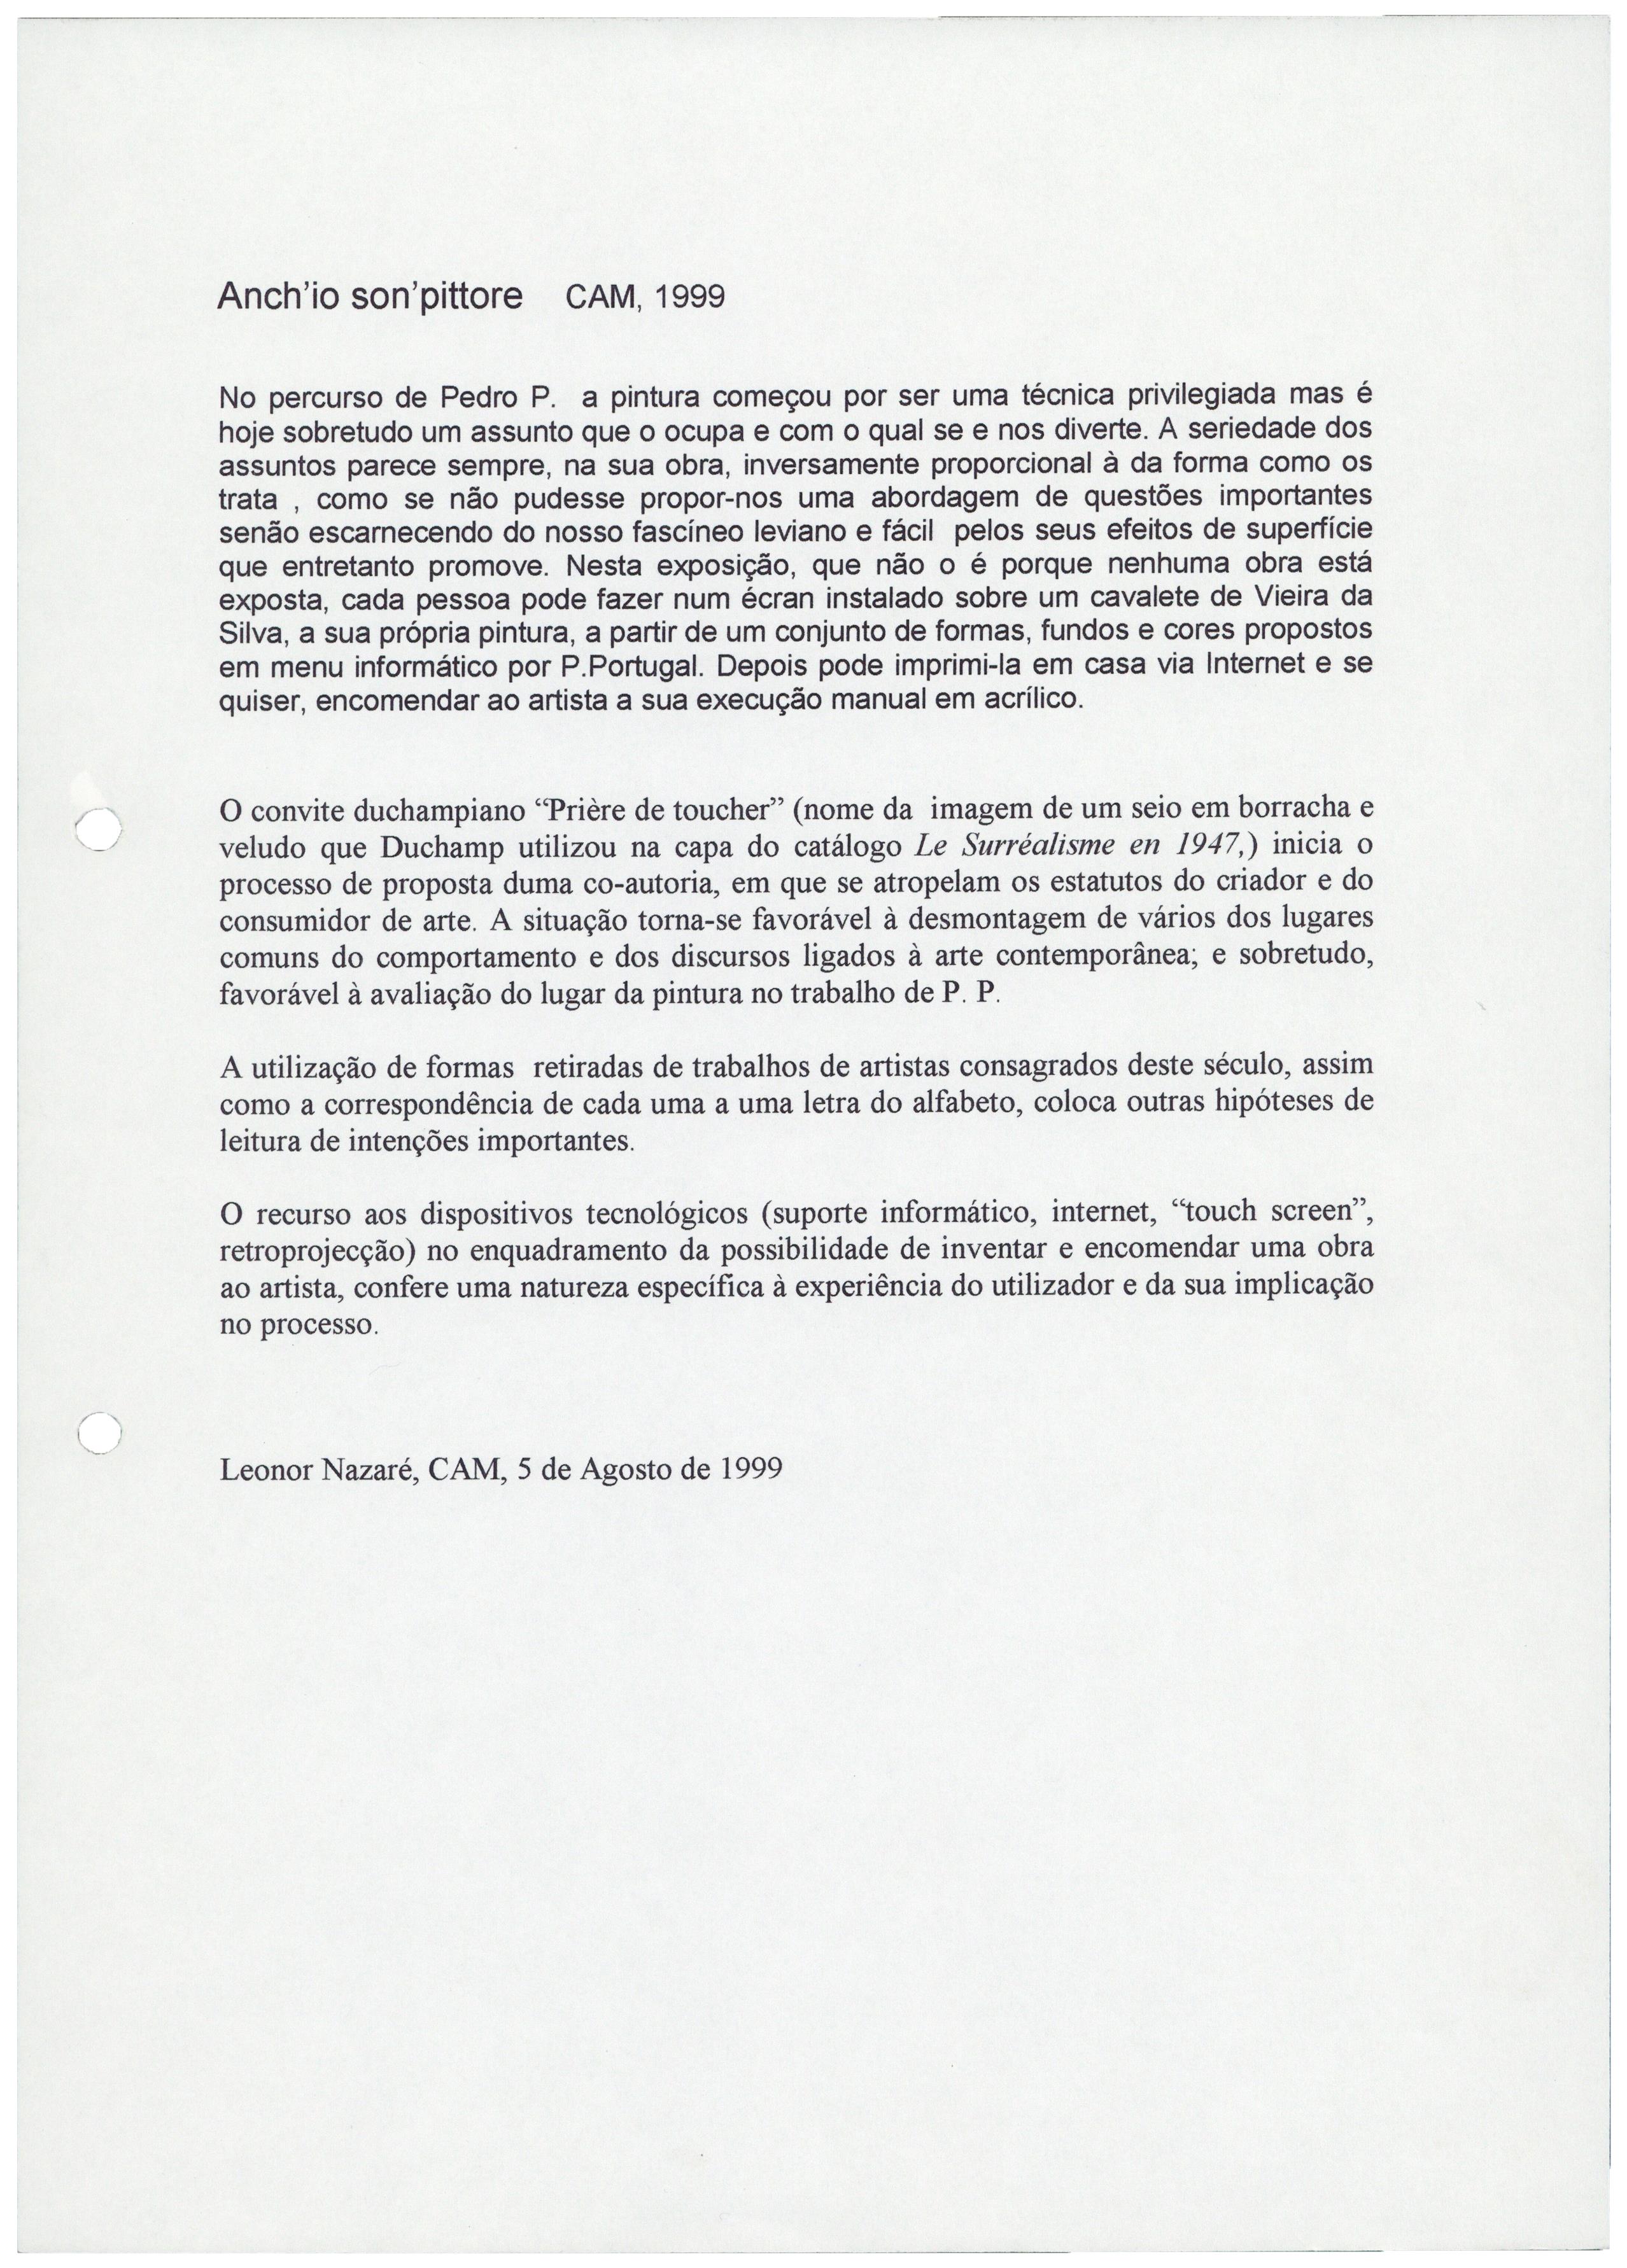 Junta Directiva do Grupo de Artistas Portugueses (GAP)